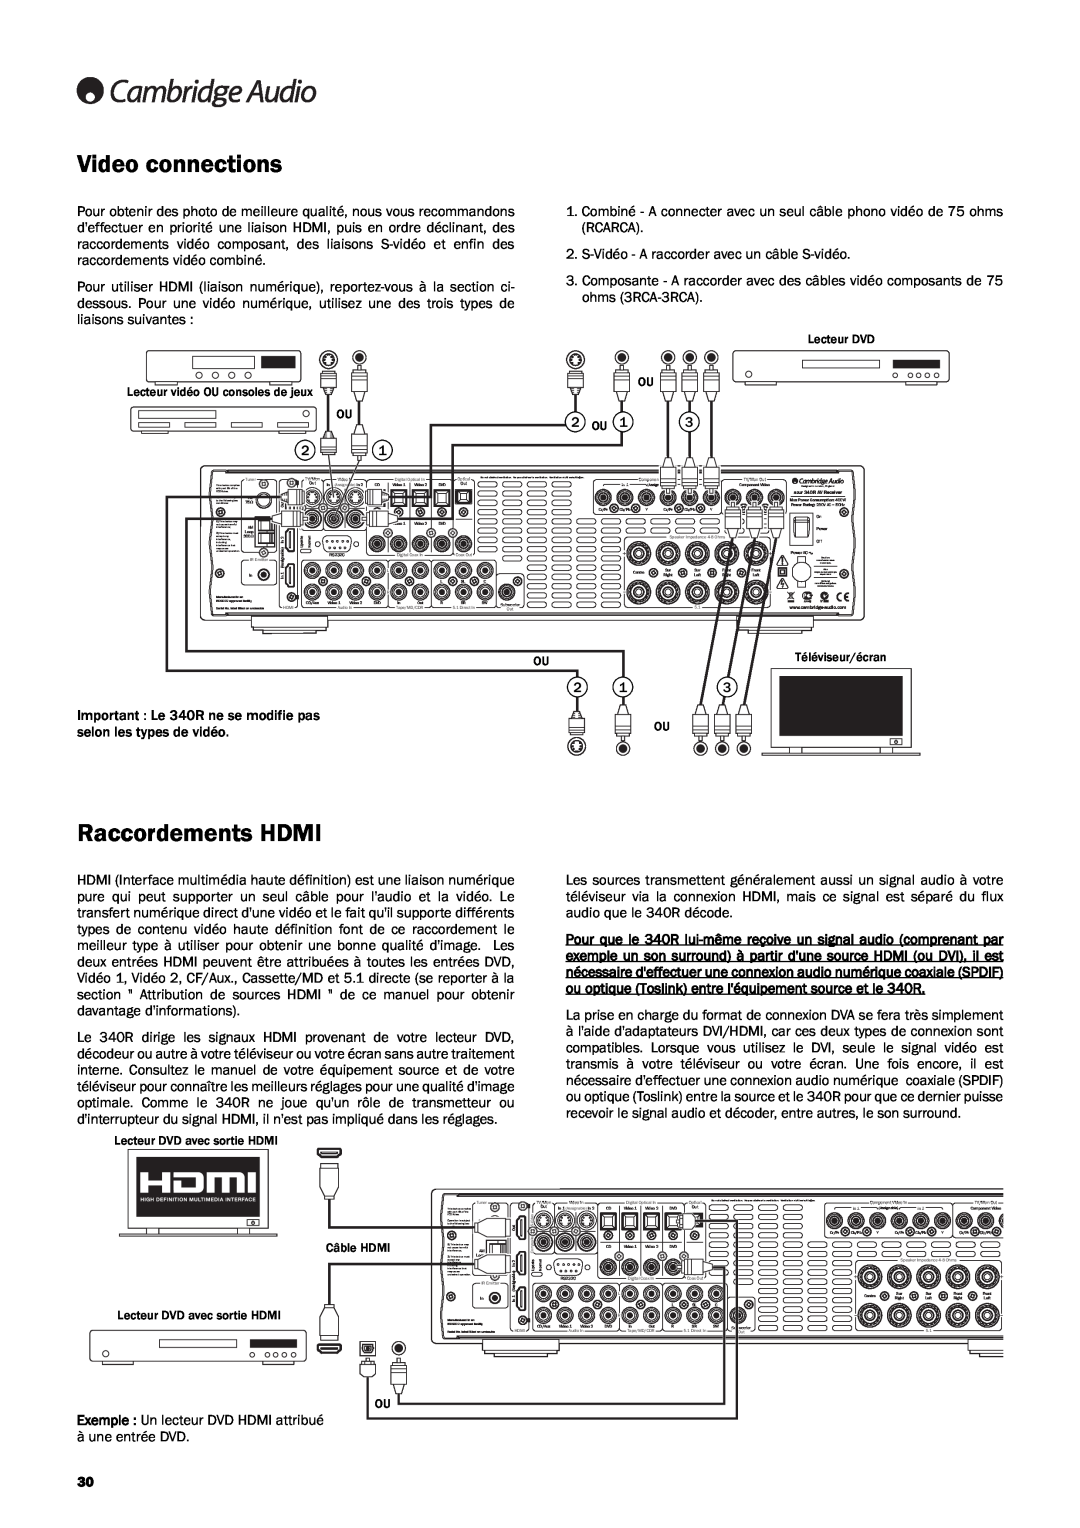 Cambridge Audio 340R manuel dutilisation Video connections, Raccordements HDMI 